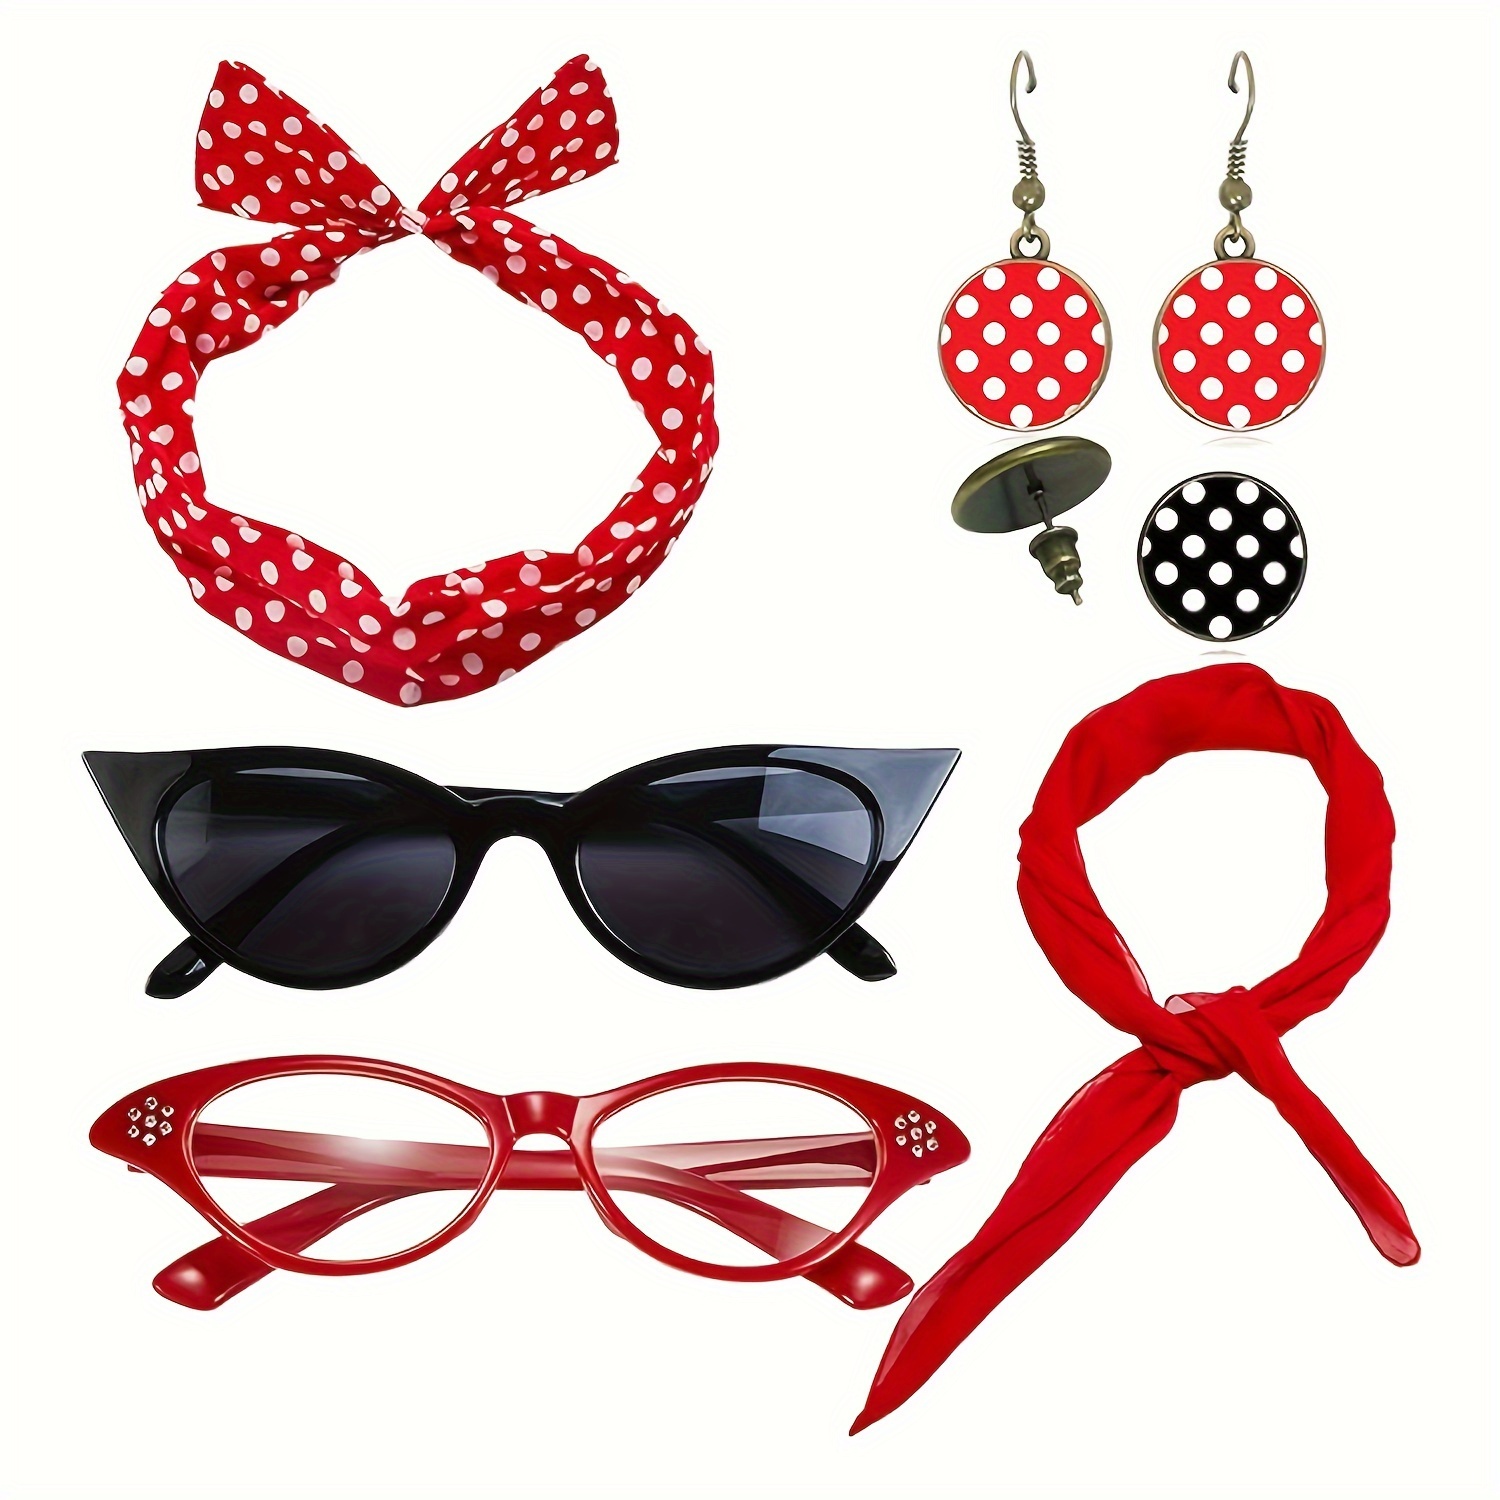 

8pcs/set Vintage Styling Accessories, 1950's Women's Costume Accessories, Chiffon Scarf, Cat Eye Glasses, Bandana Tie Headband, Drop Dot Earrings